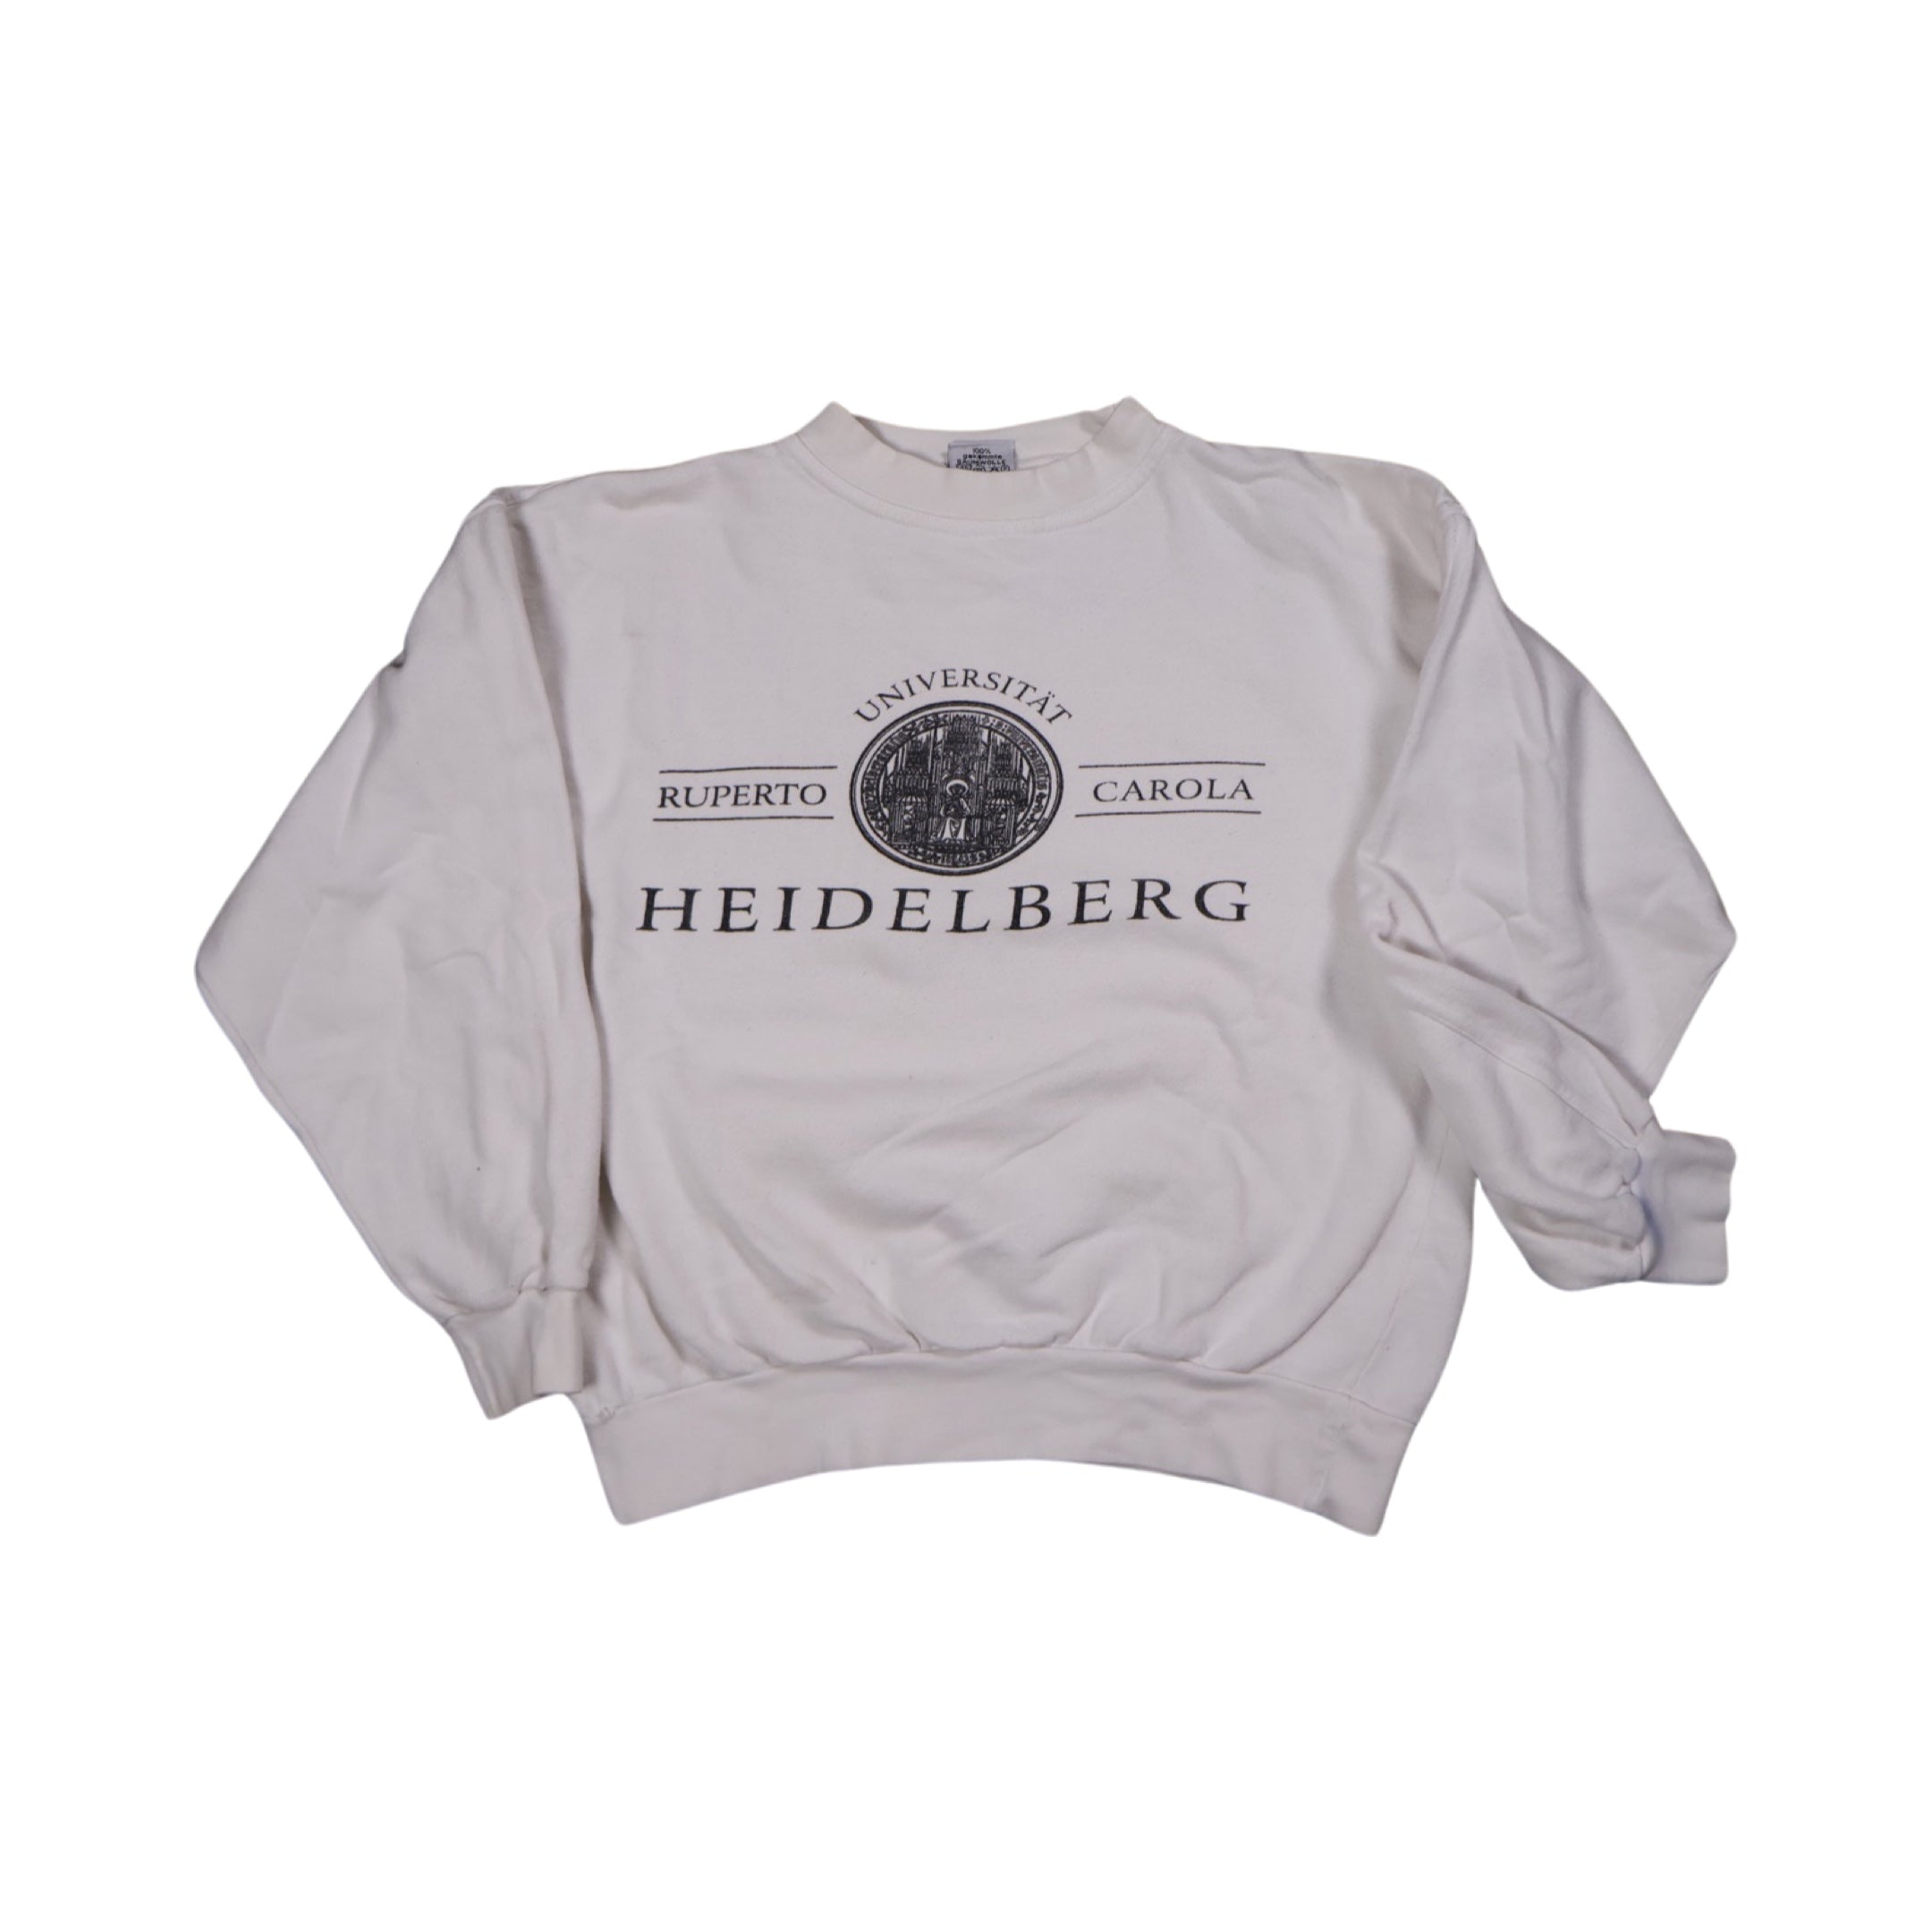 University of Heidelberg 90s Sweater (Small)